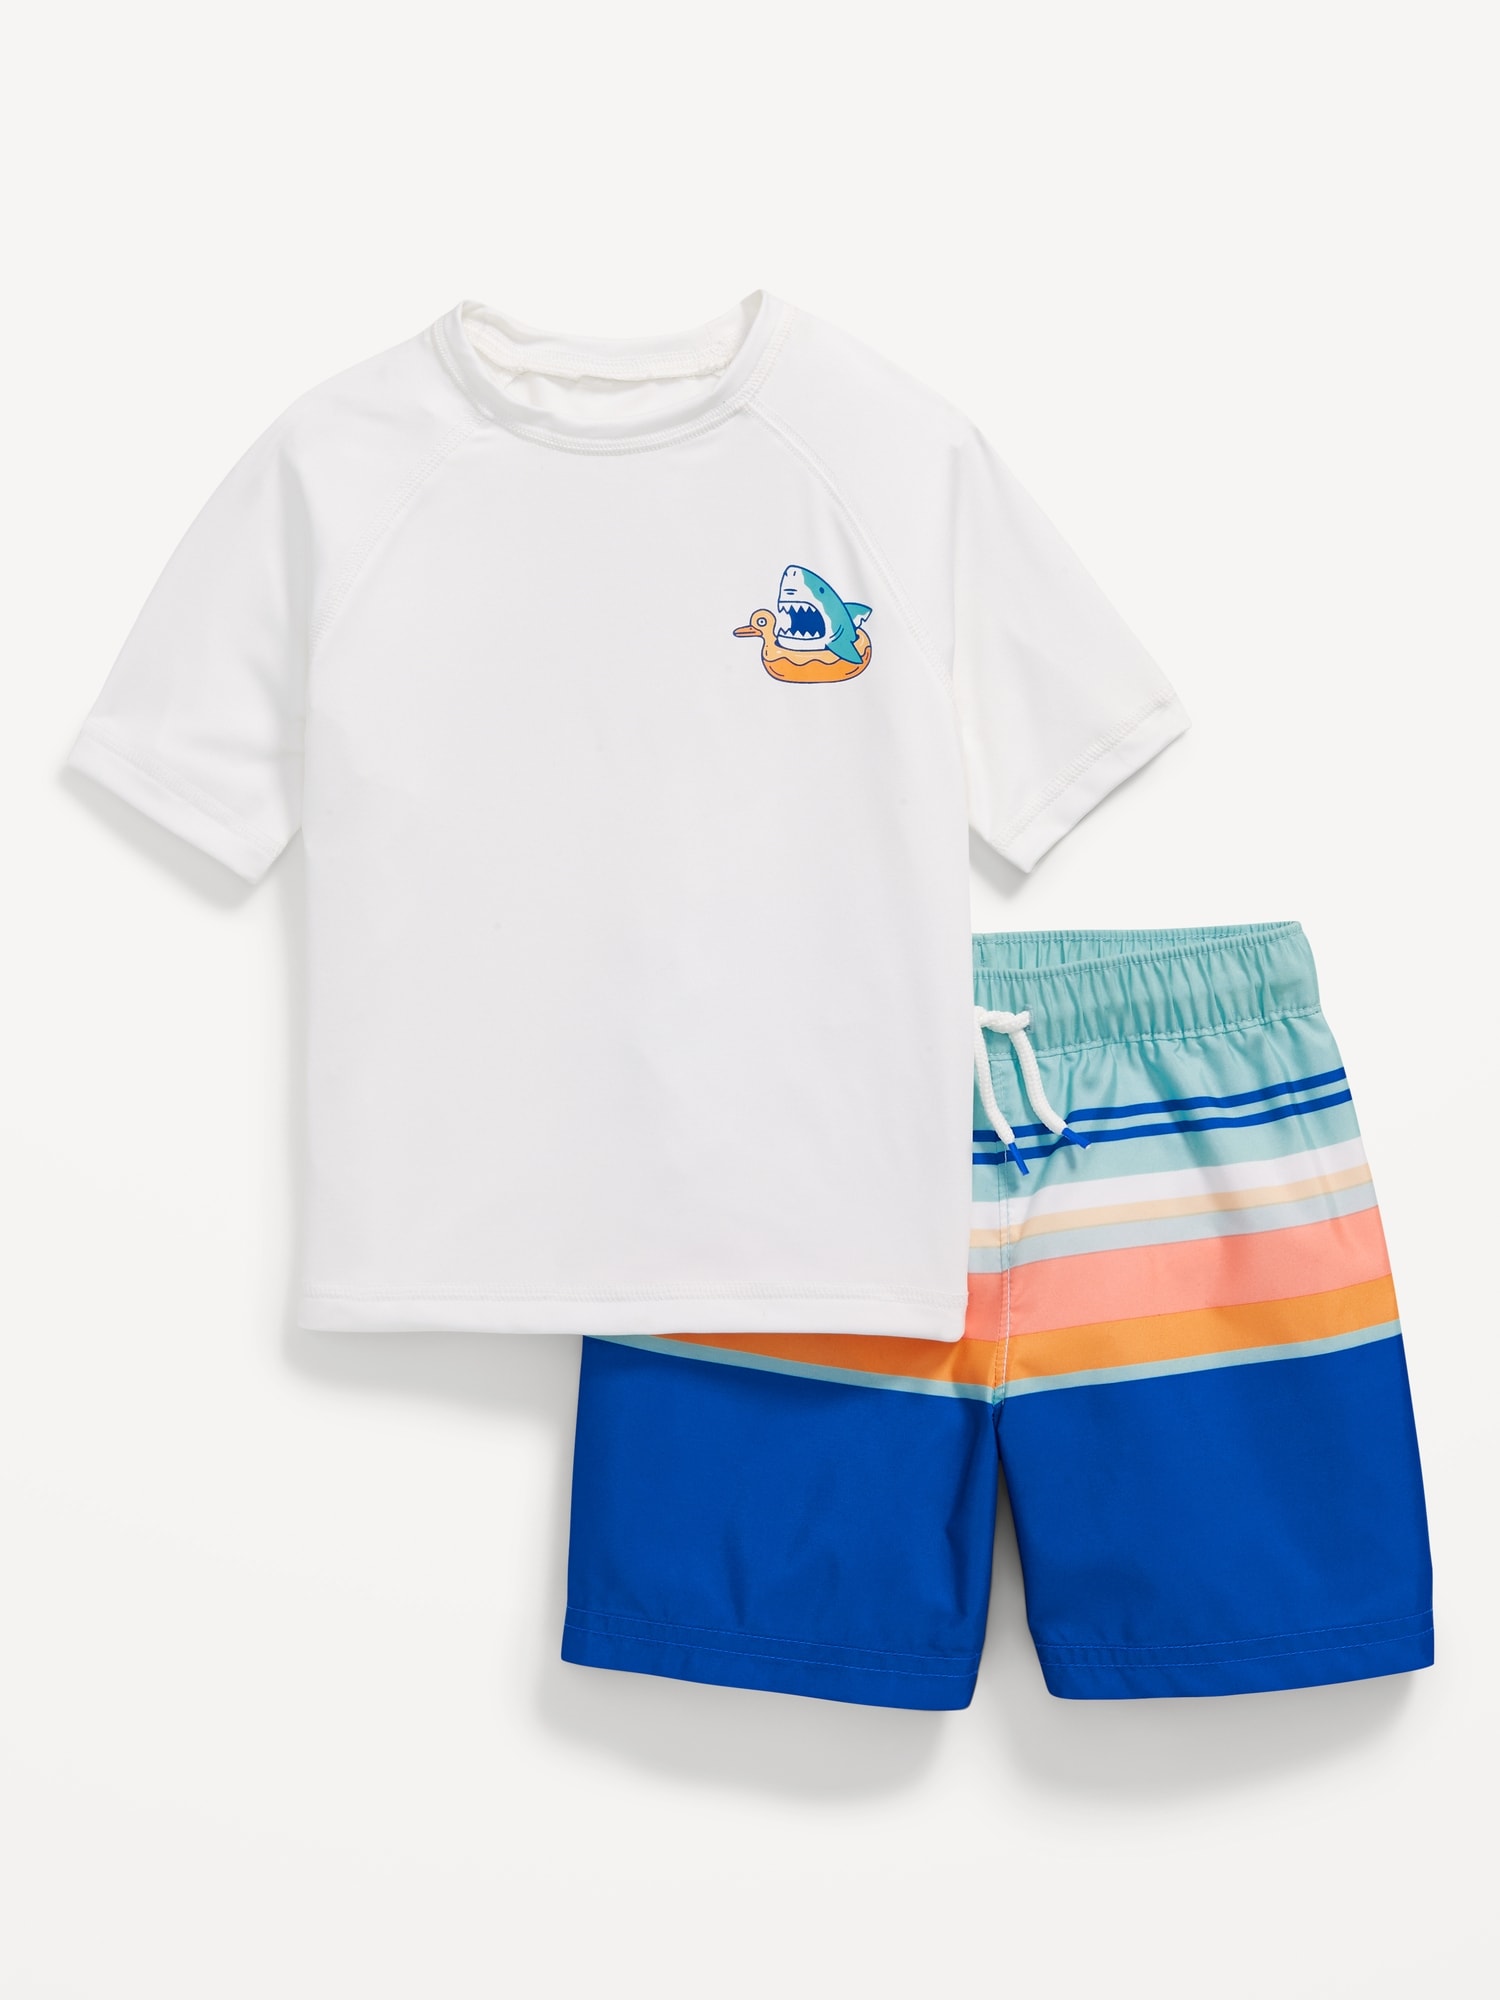 Graphic Rashguard Swim Top & Trunks for Toddler Boys Hot Deal